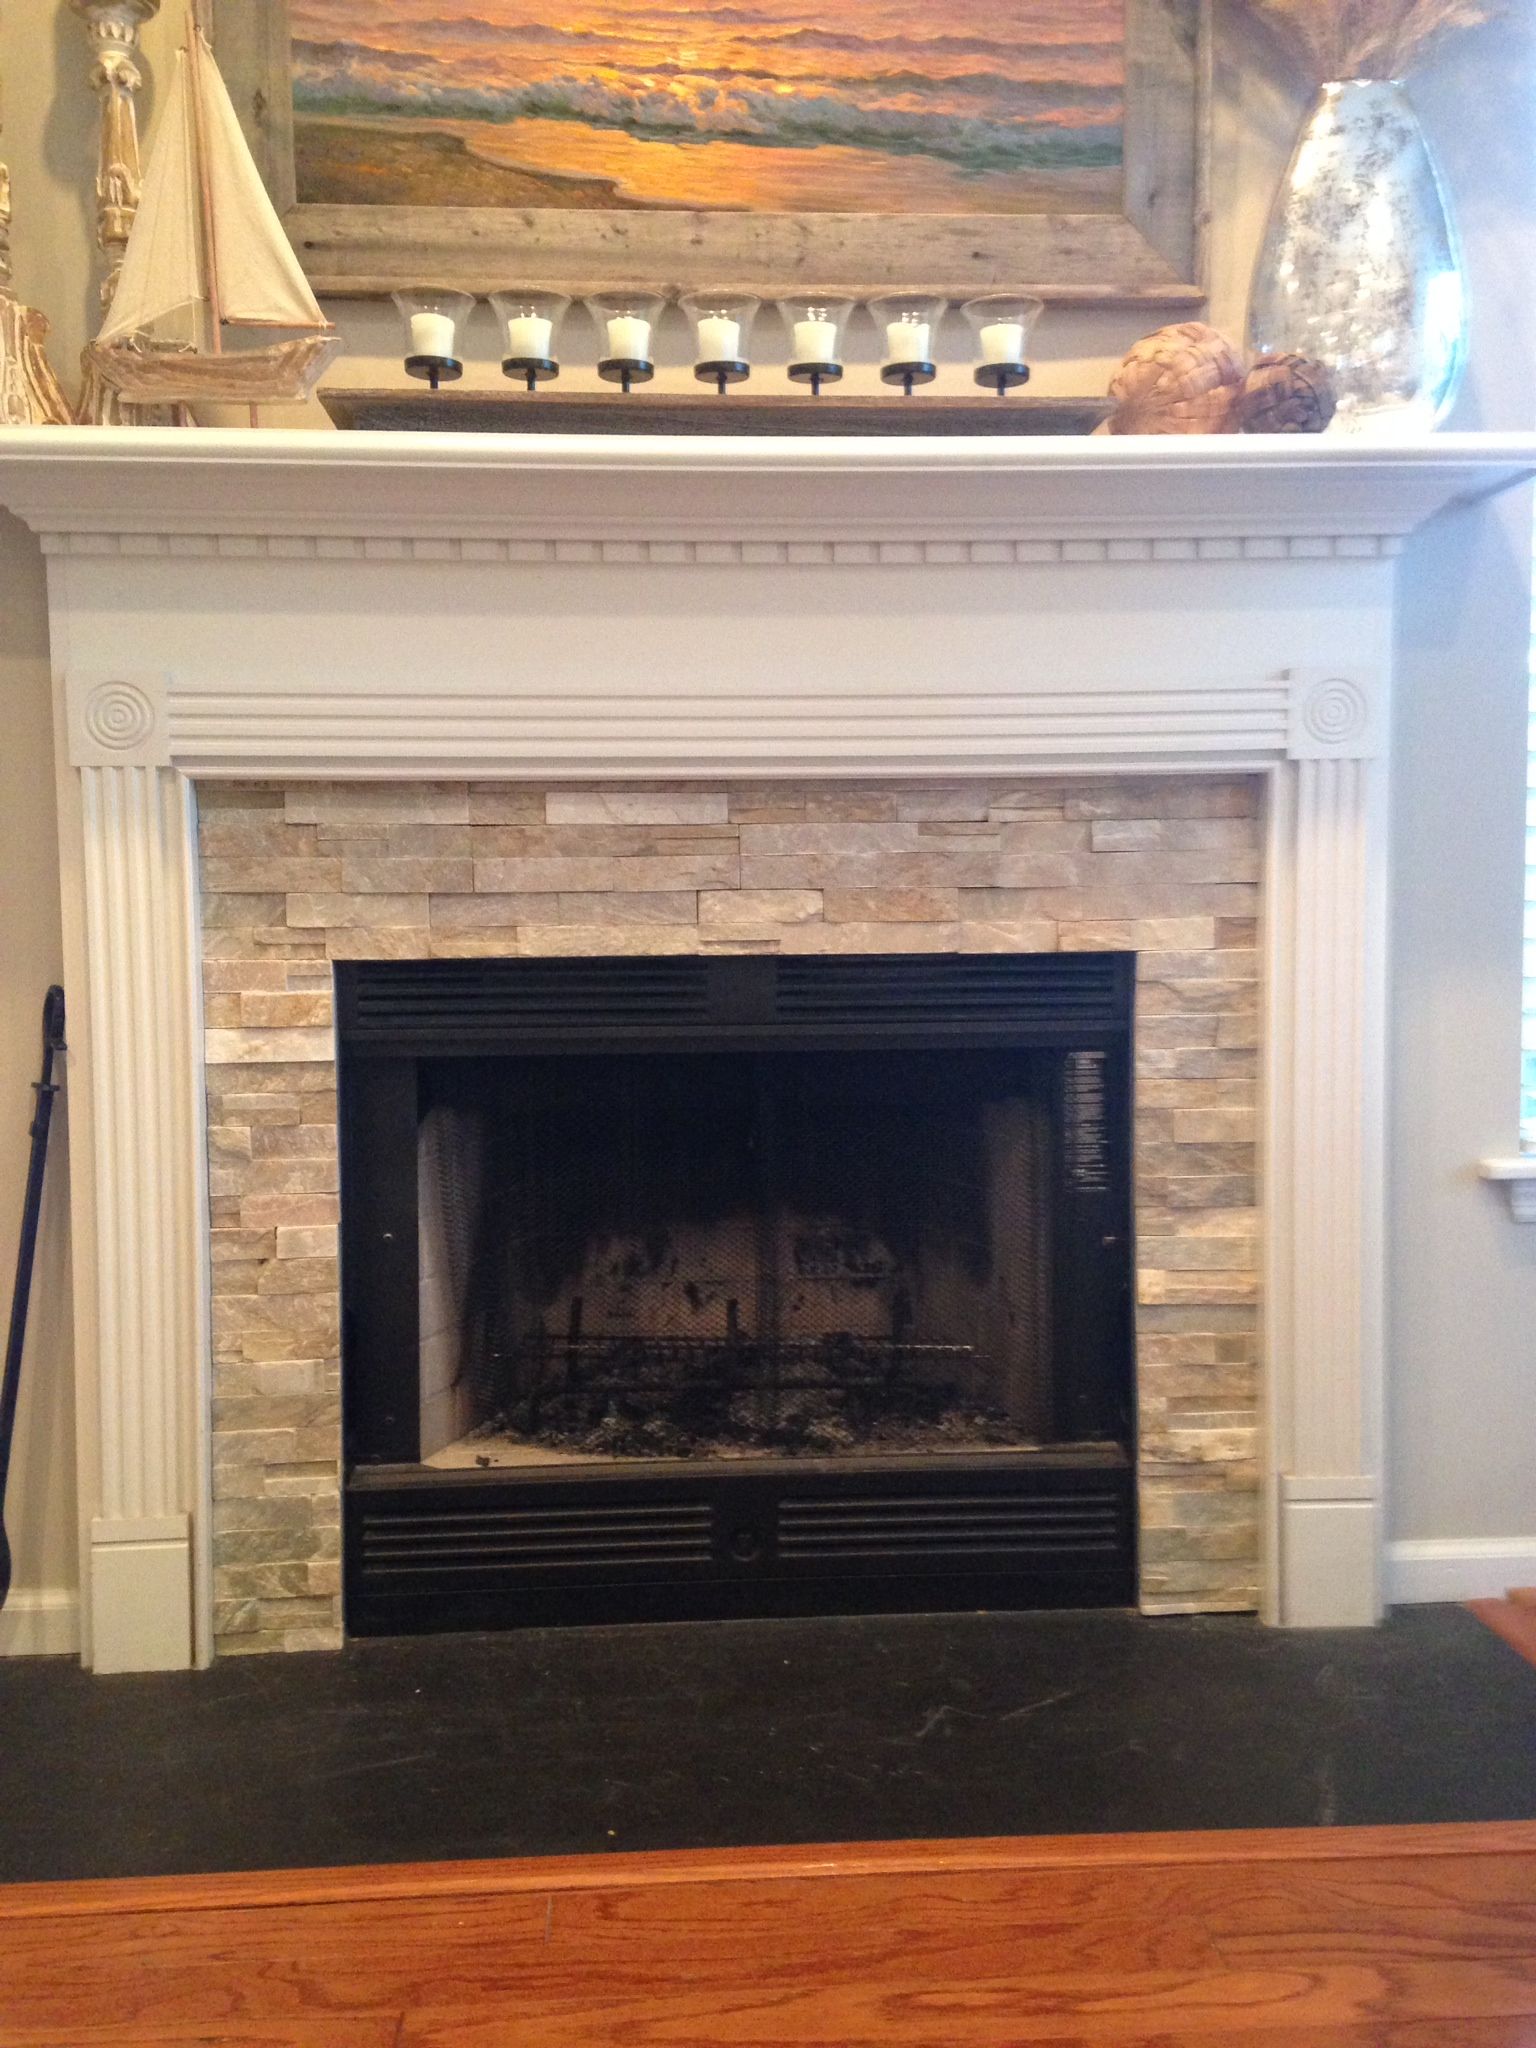 Rocky Mountain Fireplace New Ledgestone Looks Like the Desert Quartz I Like the Hearth